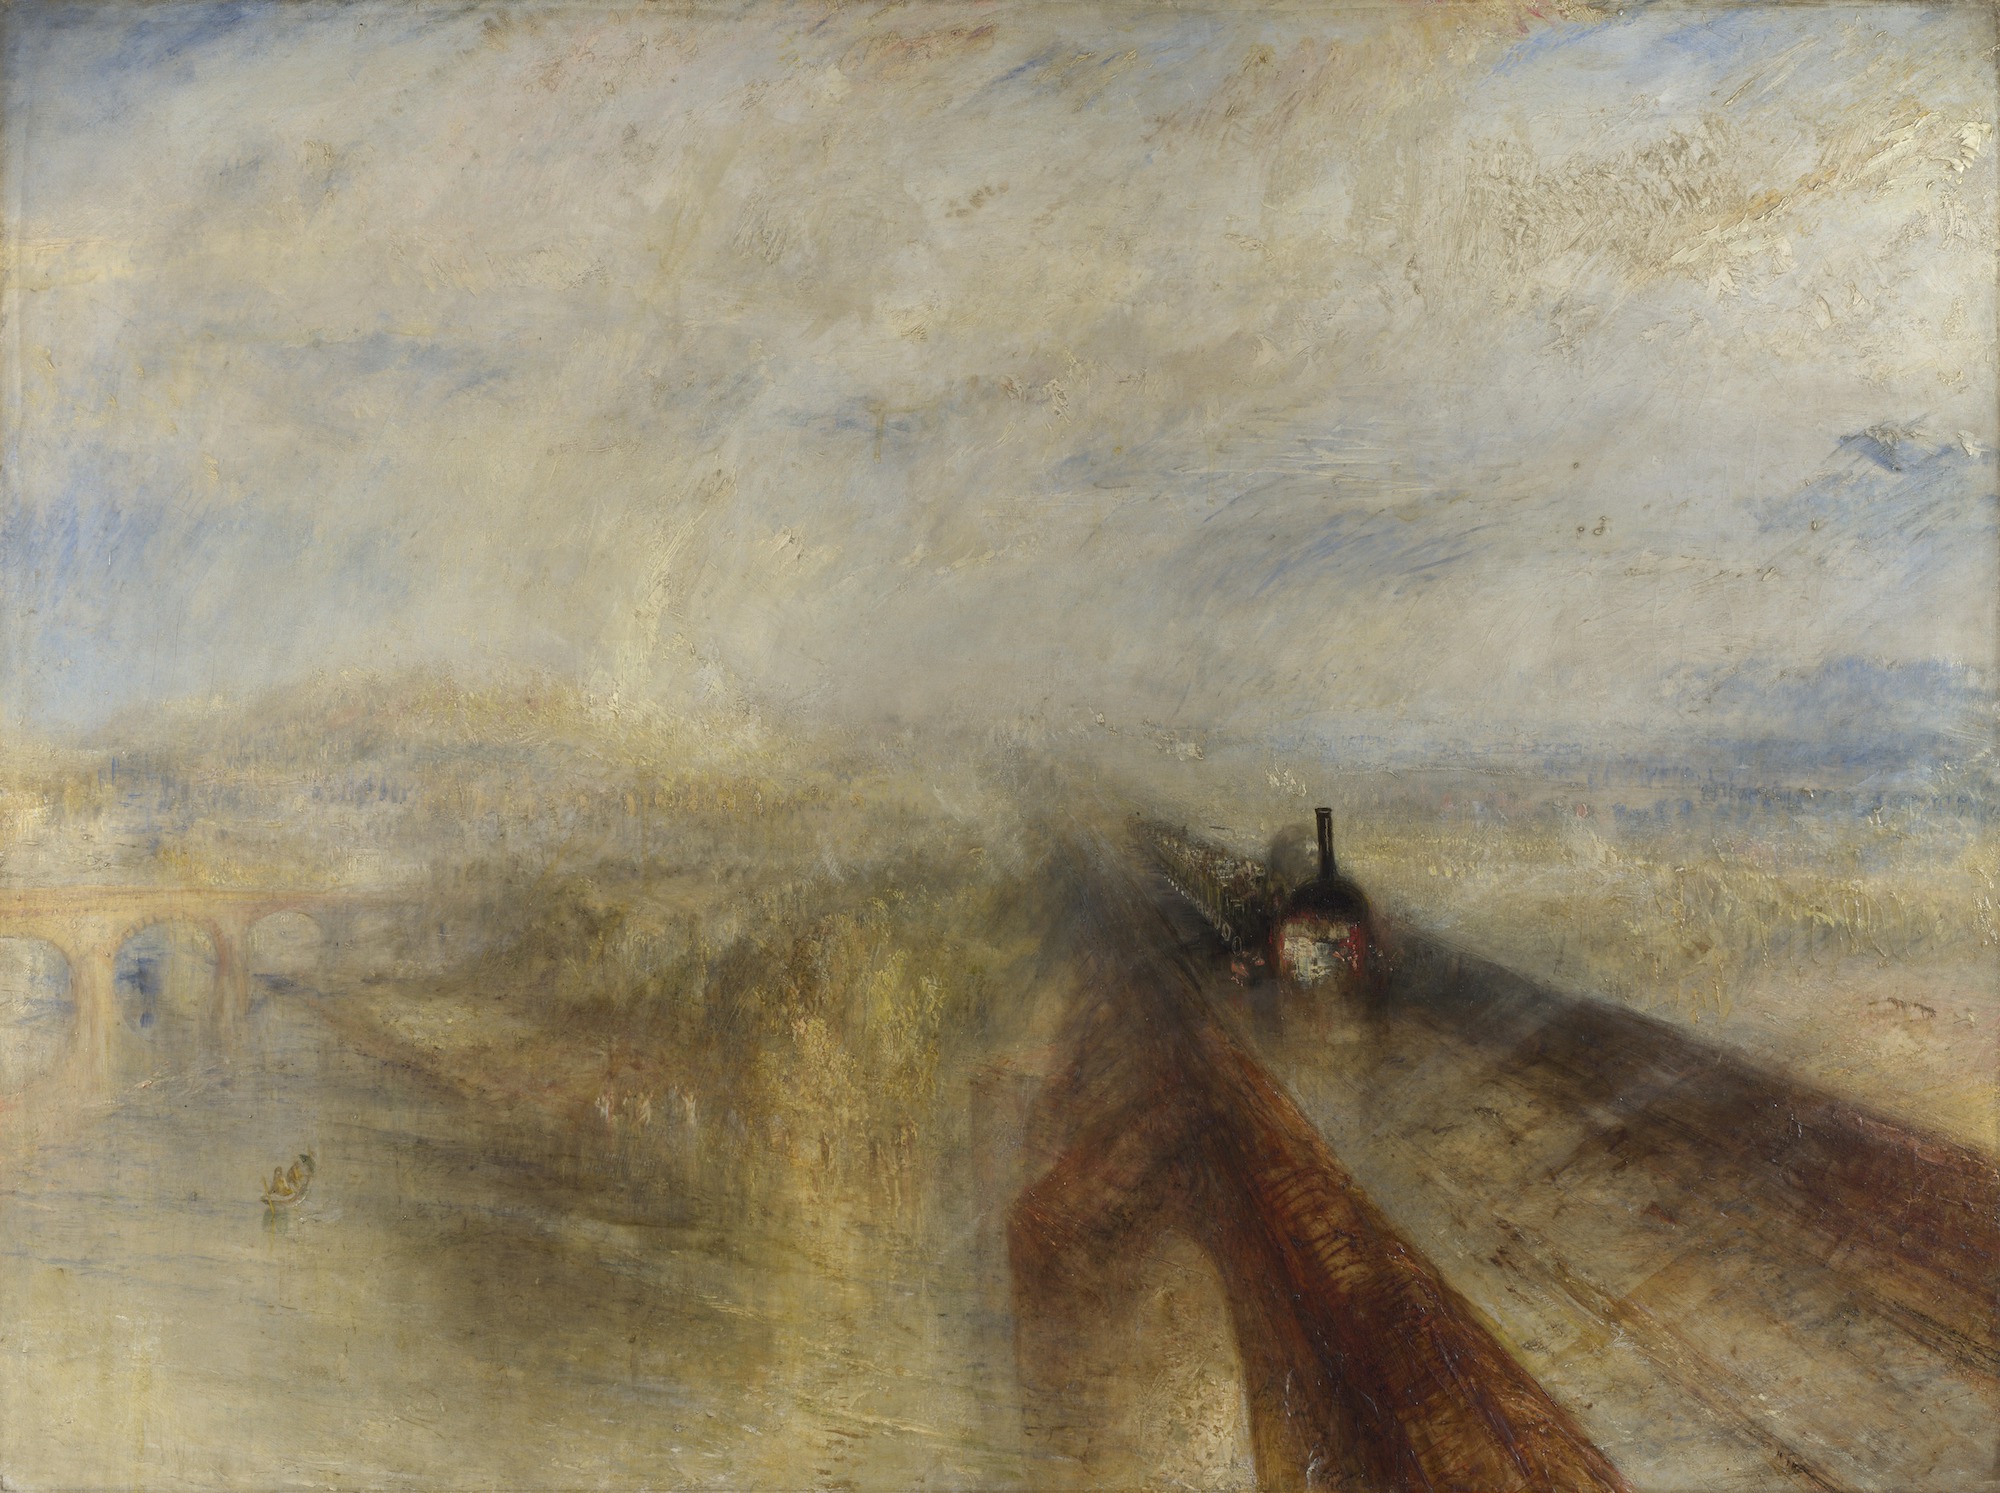 Déšť, pára a rychlost – Great Western Railway by Joseph Mallord William Turner - 1844 - 91 cm x 122 cm 